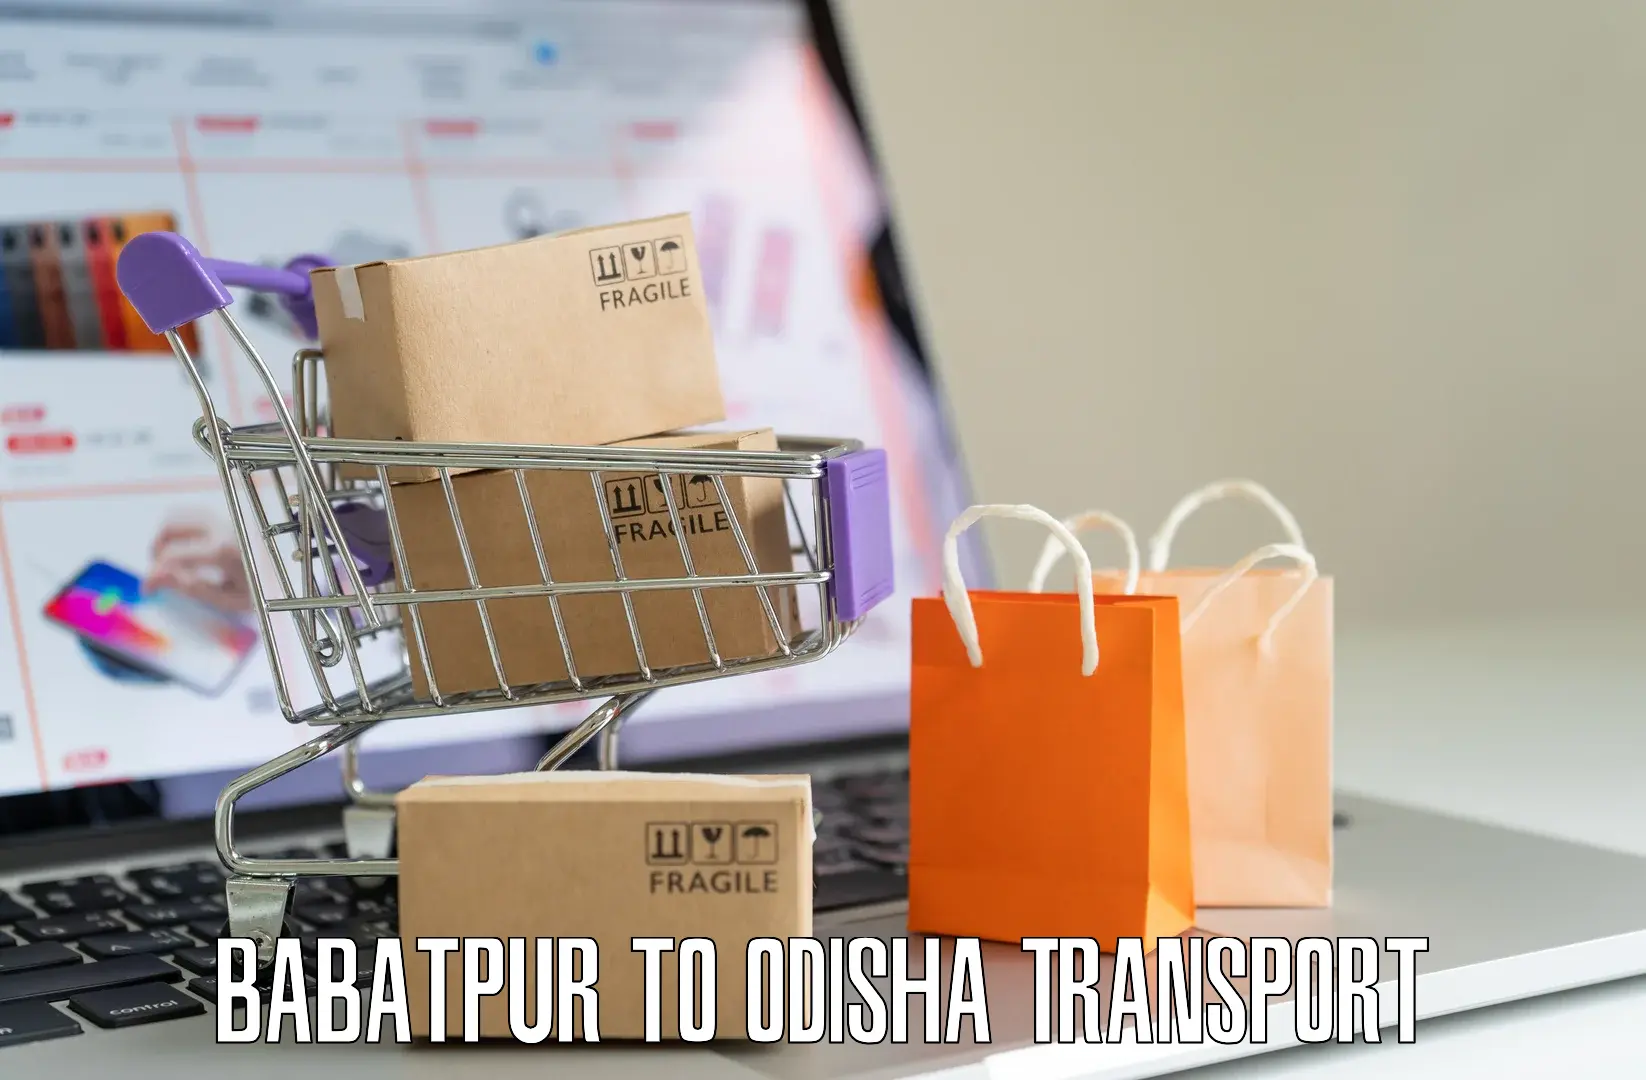 Online transport Babatpur to Bhadrak